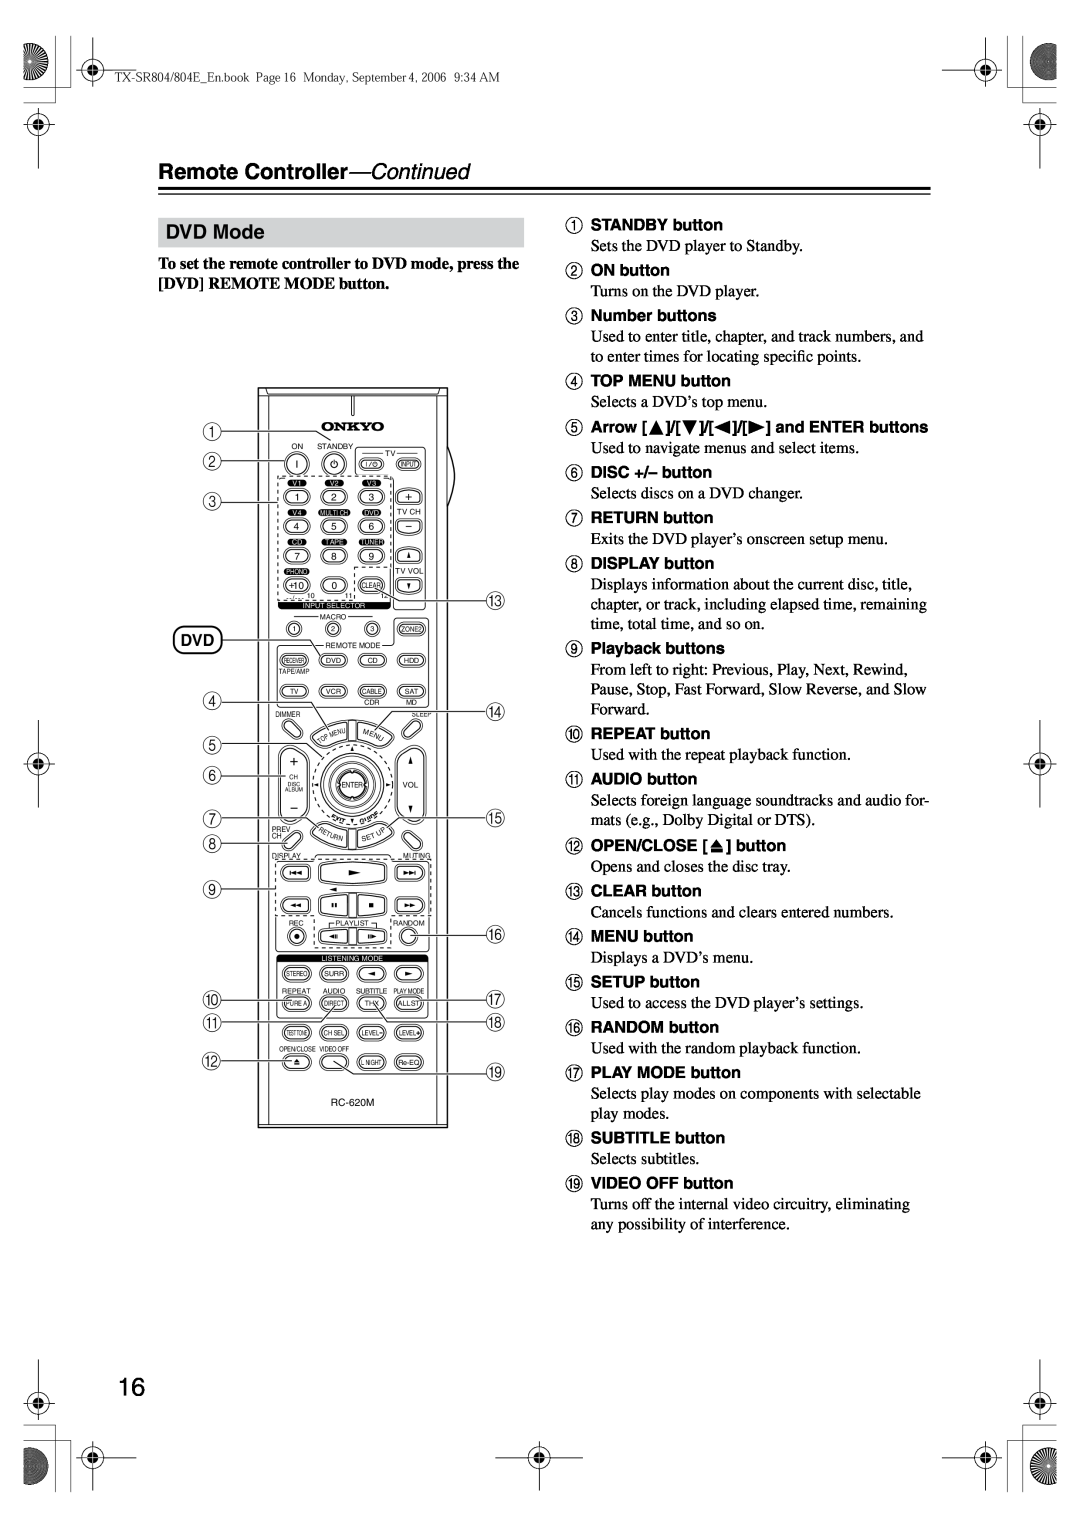 Onkyo TX-SR804E instruction manual DVD Mode, Remote Controller—Continued 